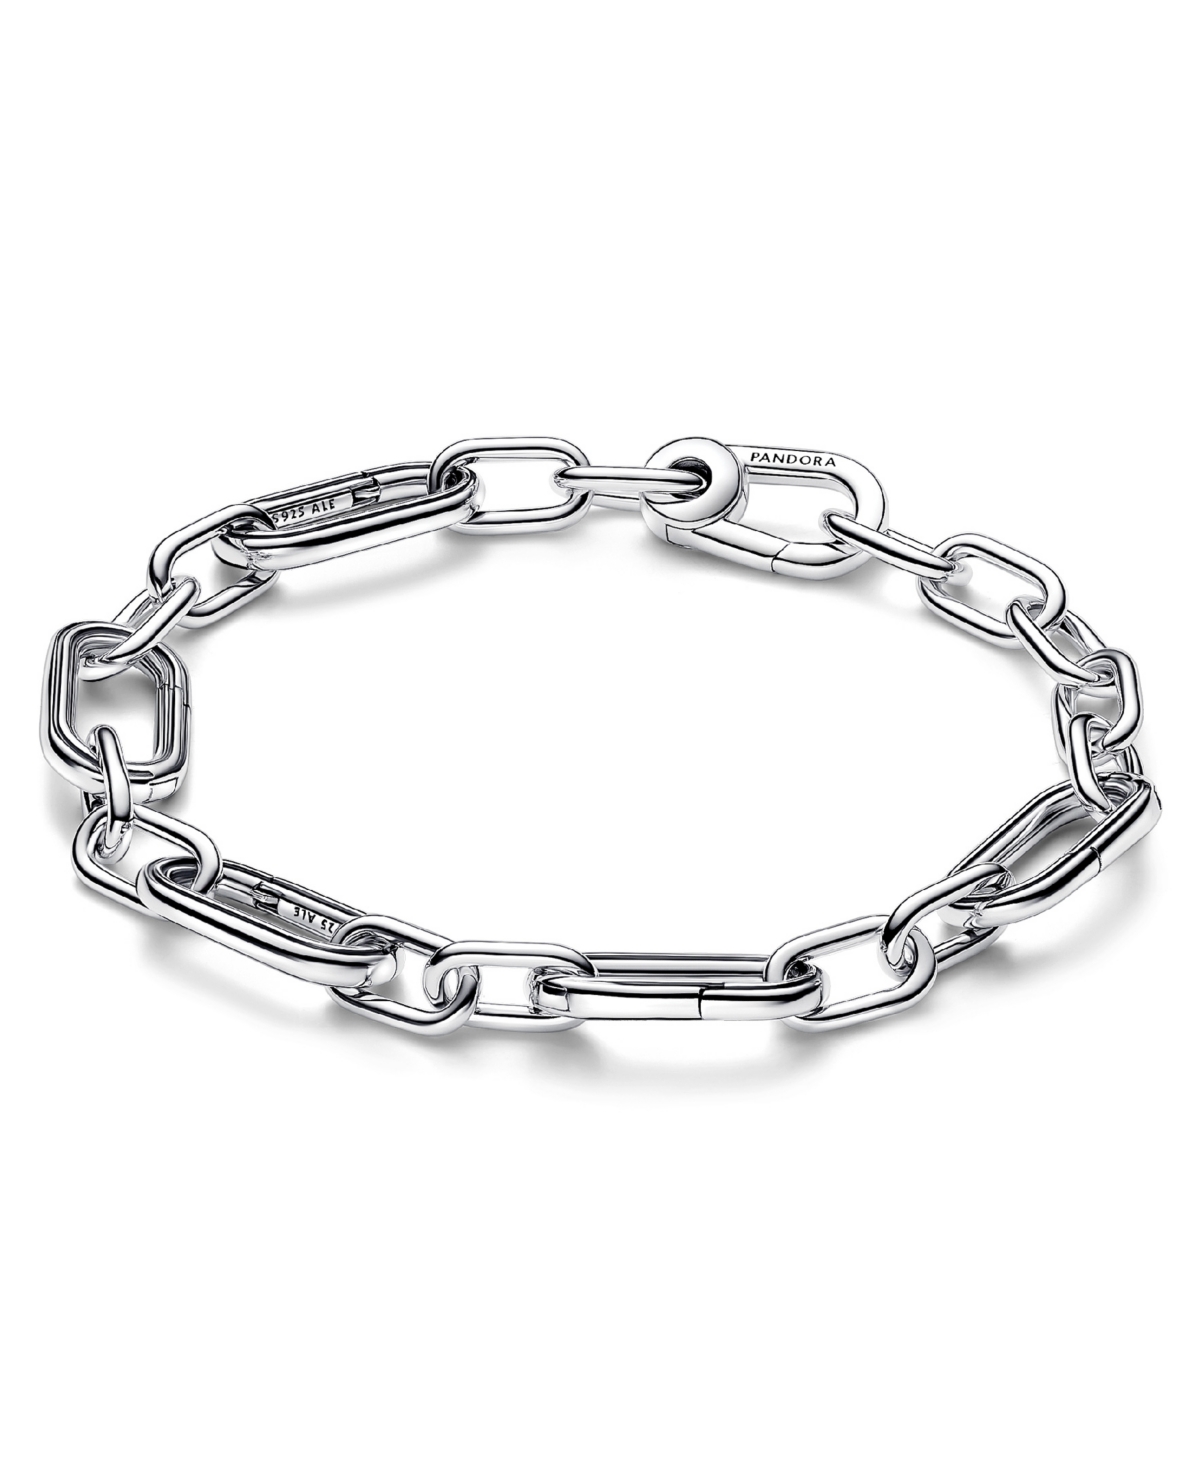 Pandora In Sterling Silver Five Openable Link Chain Bracelet